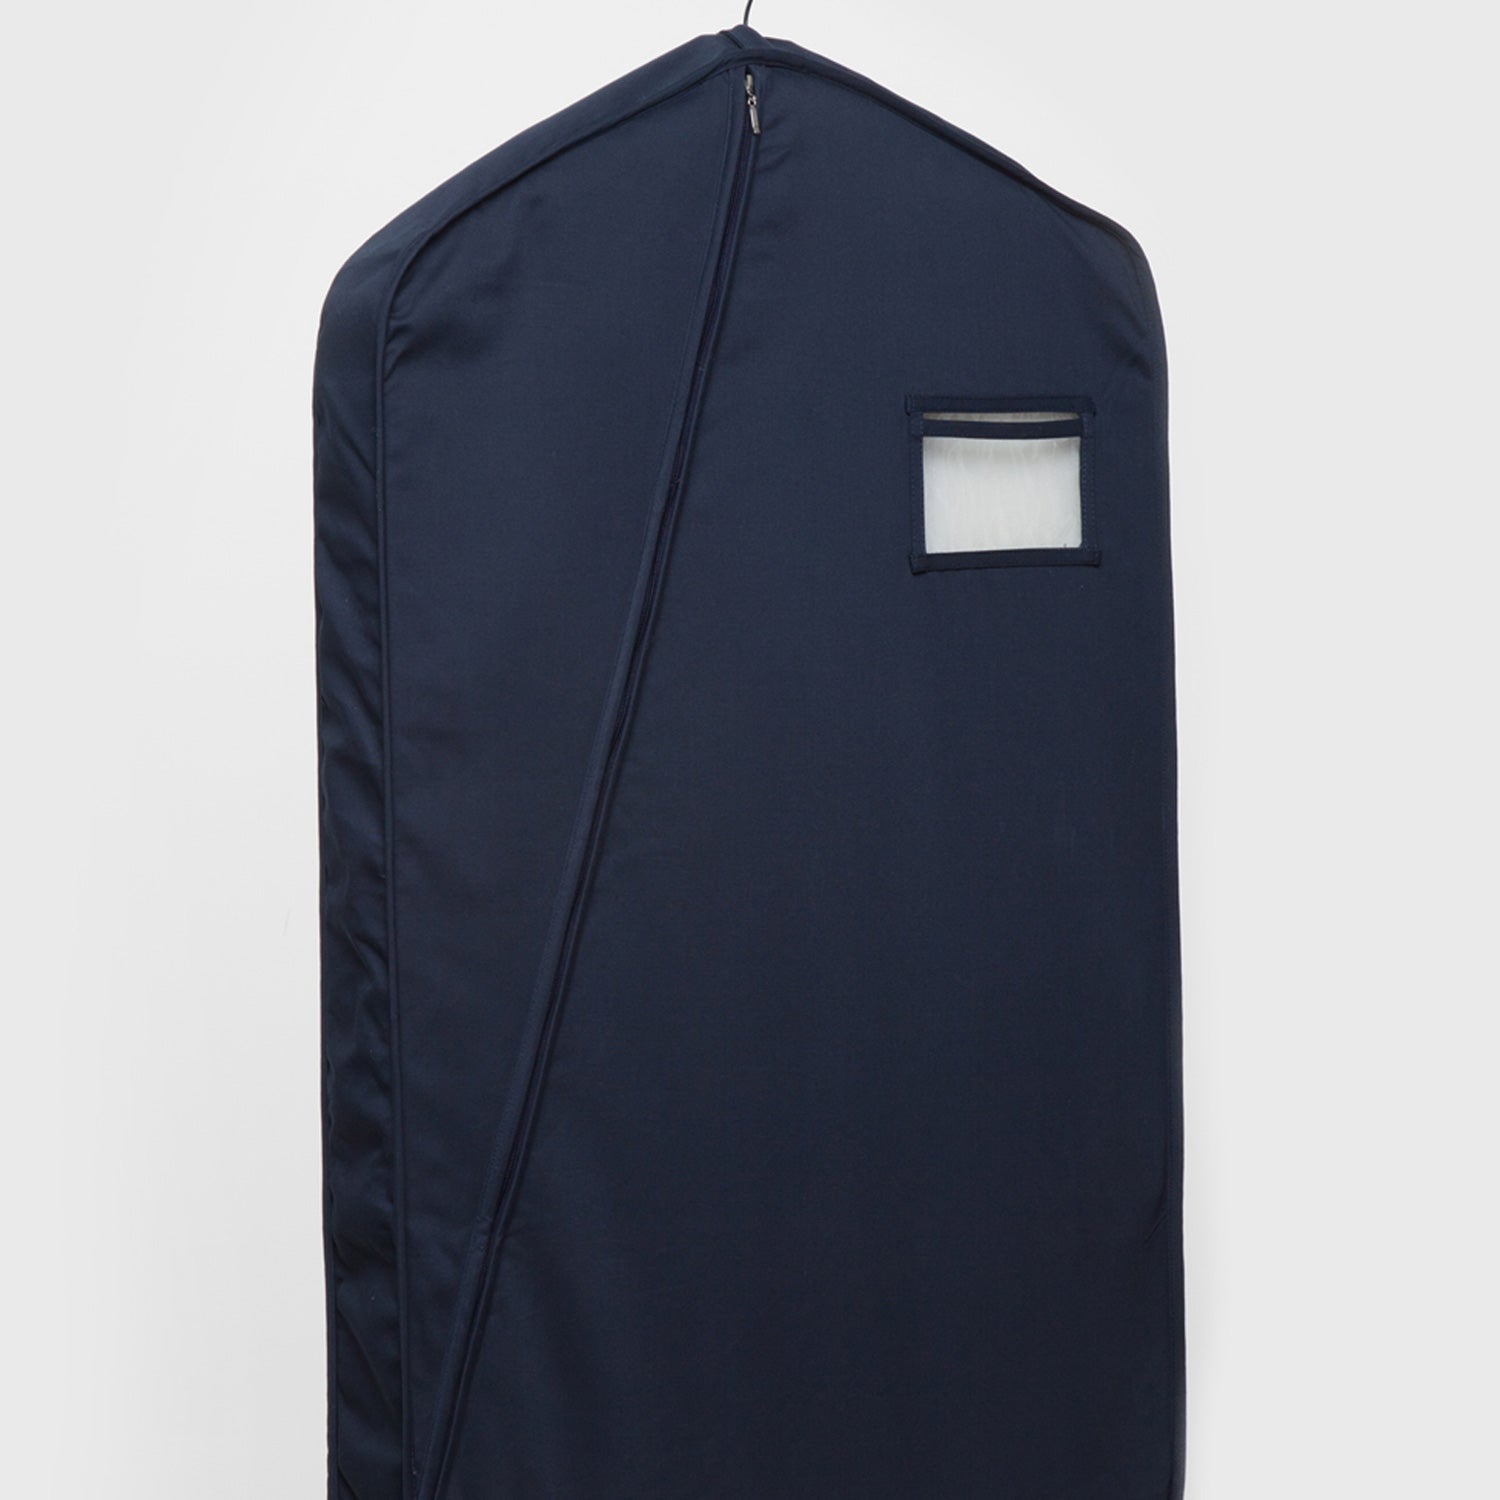 A KirbyAllison.com Luxury Garment Storage Bag.